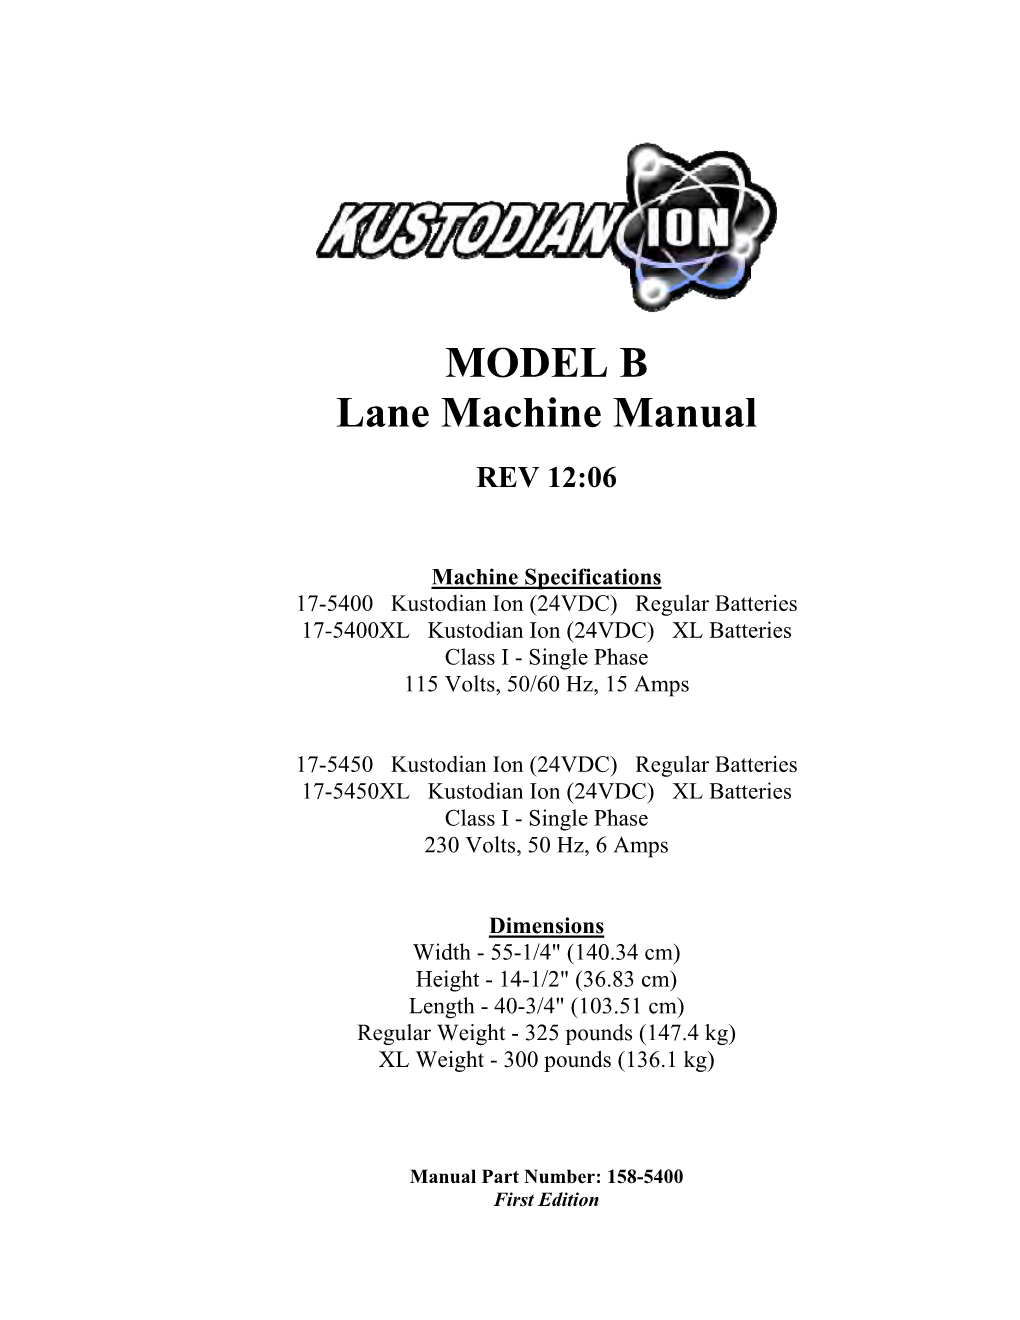 MODEL B Lane Machine Manual